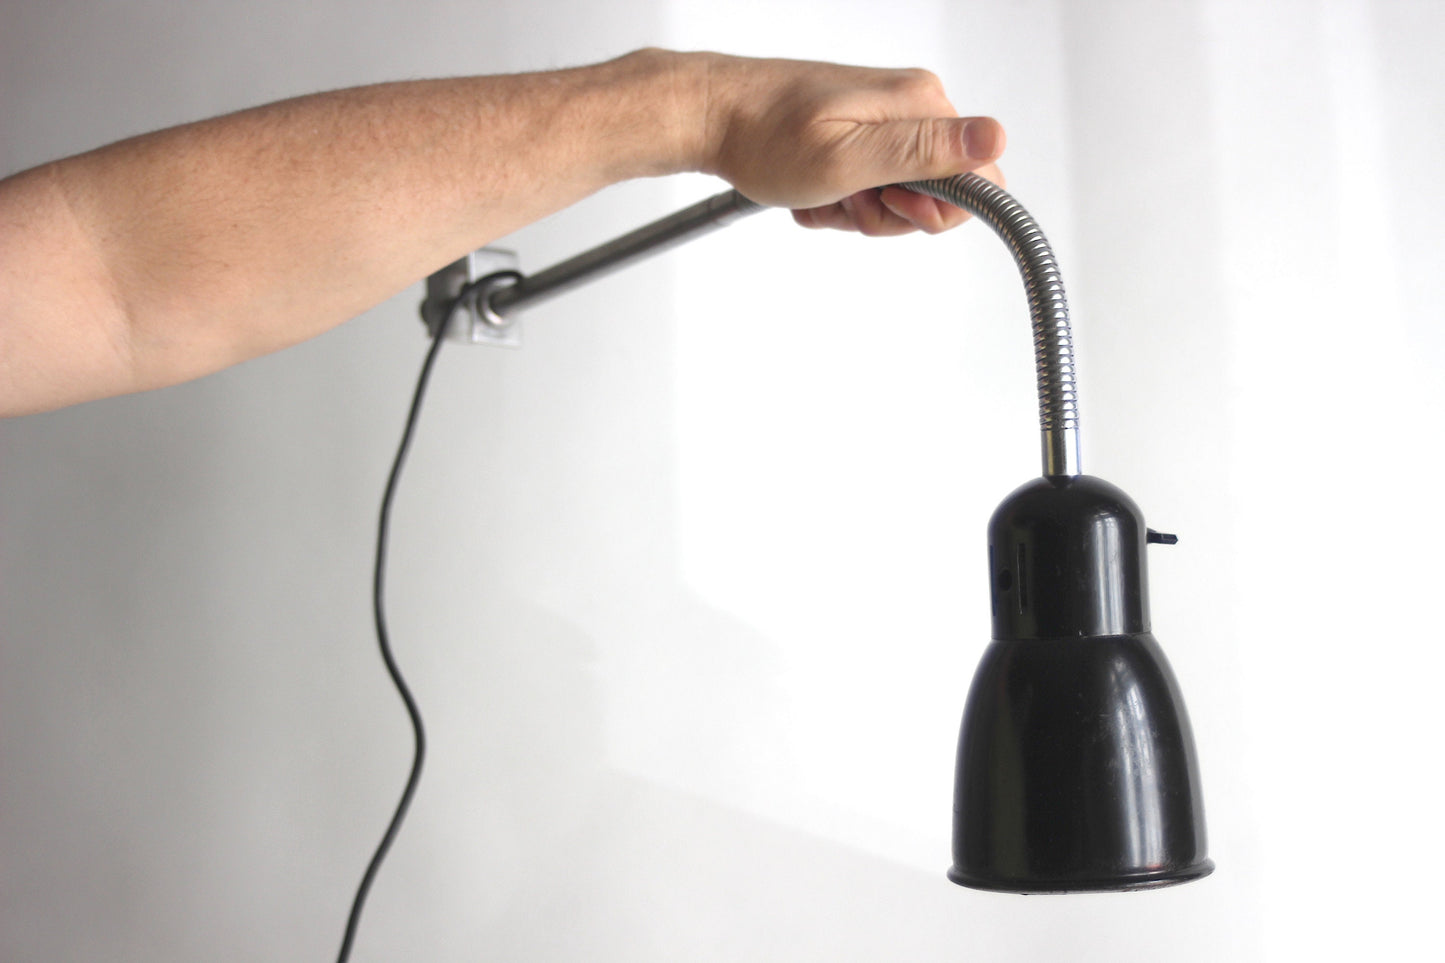 Industrial gooseneck black and silver vintage clamp lamp - Bauhaus design Mid century design